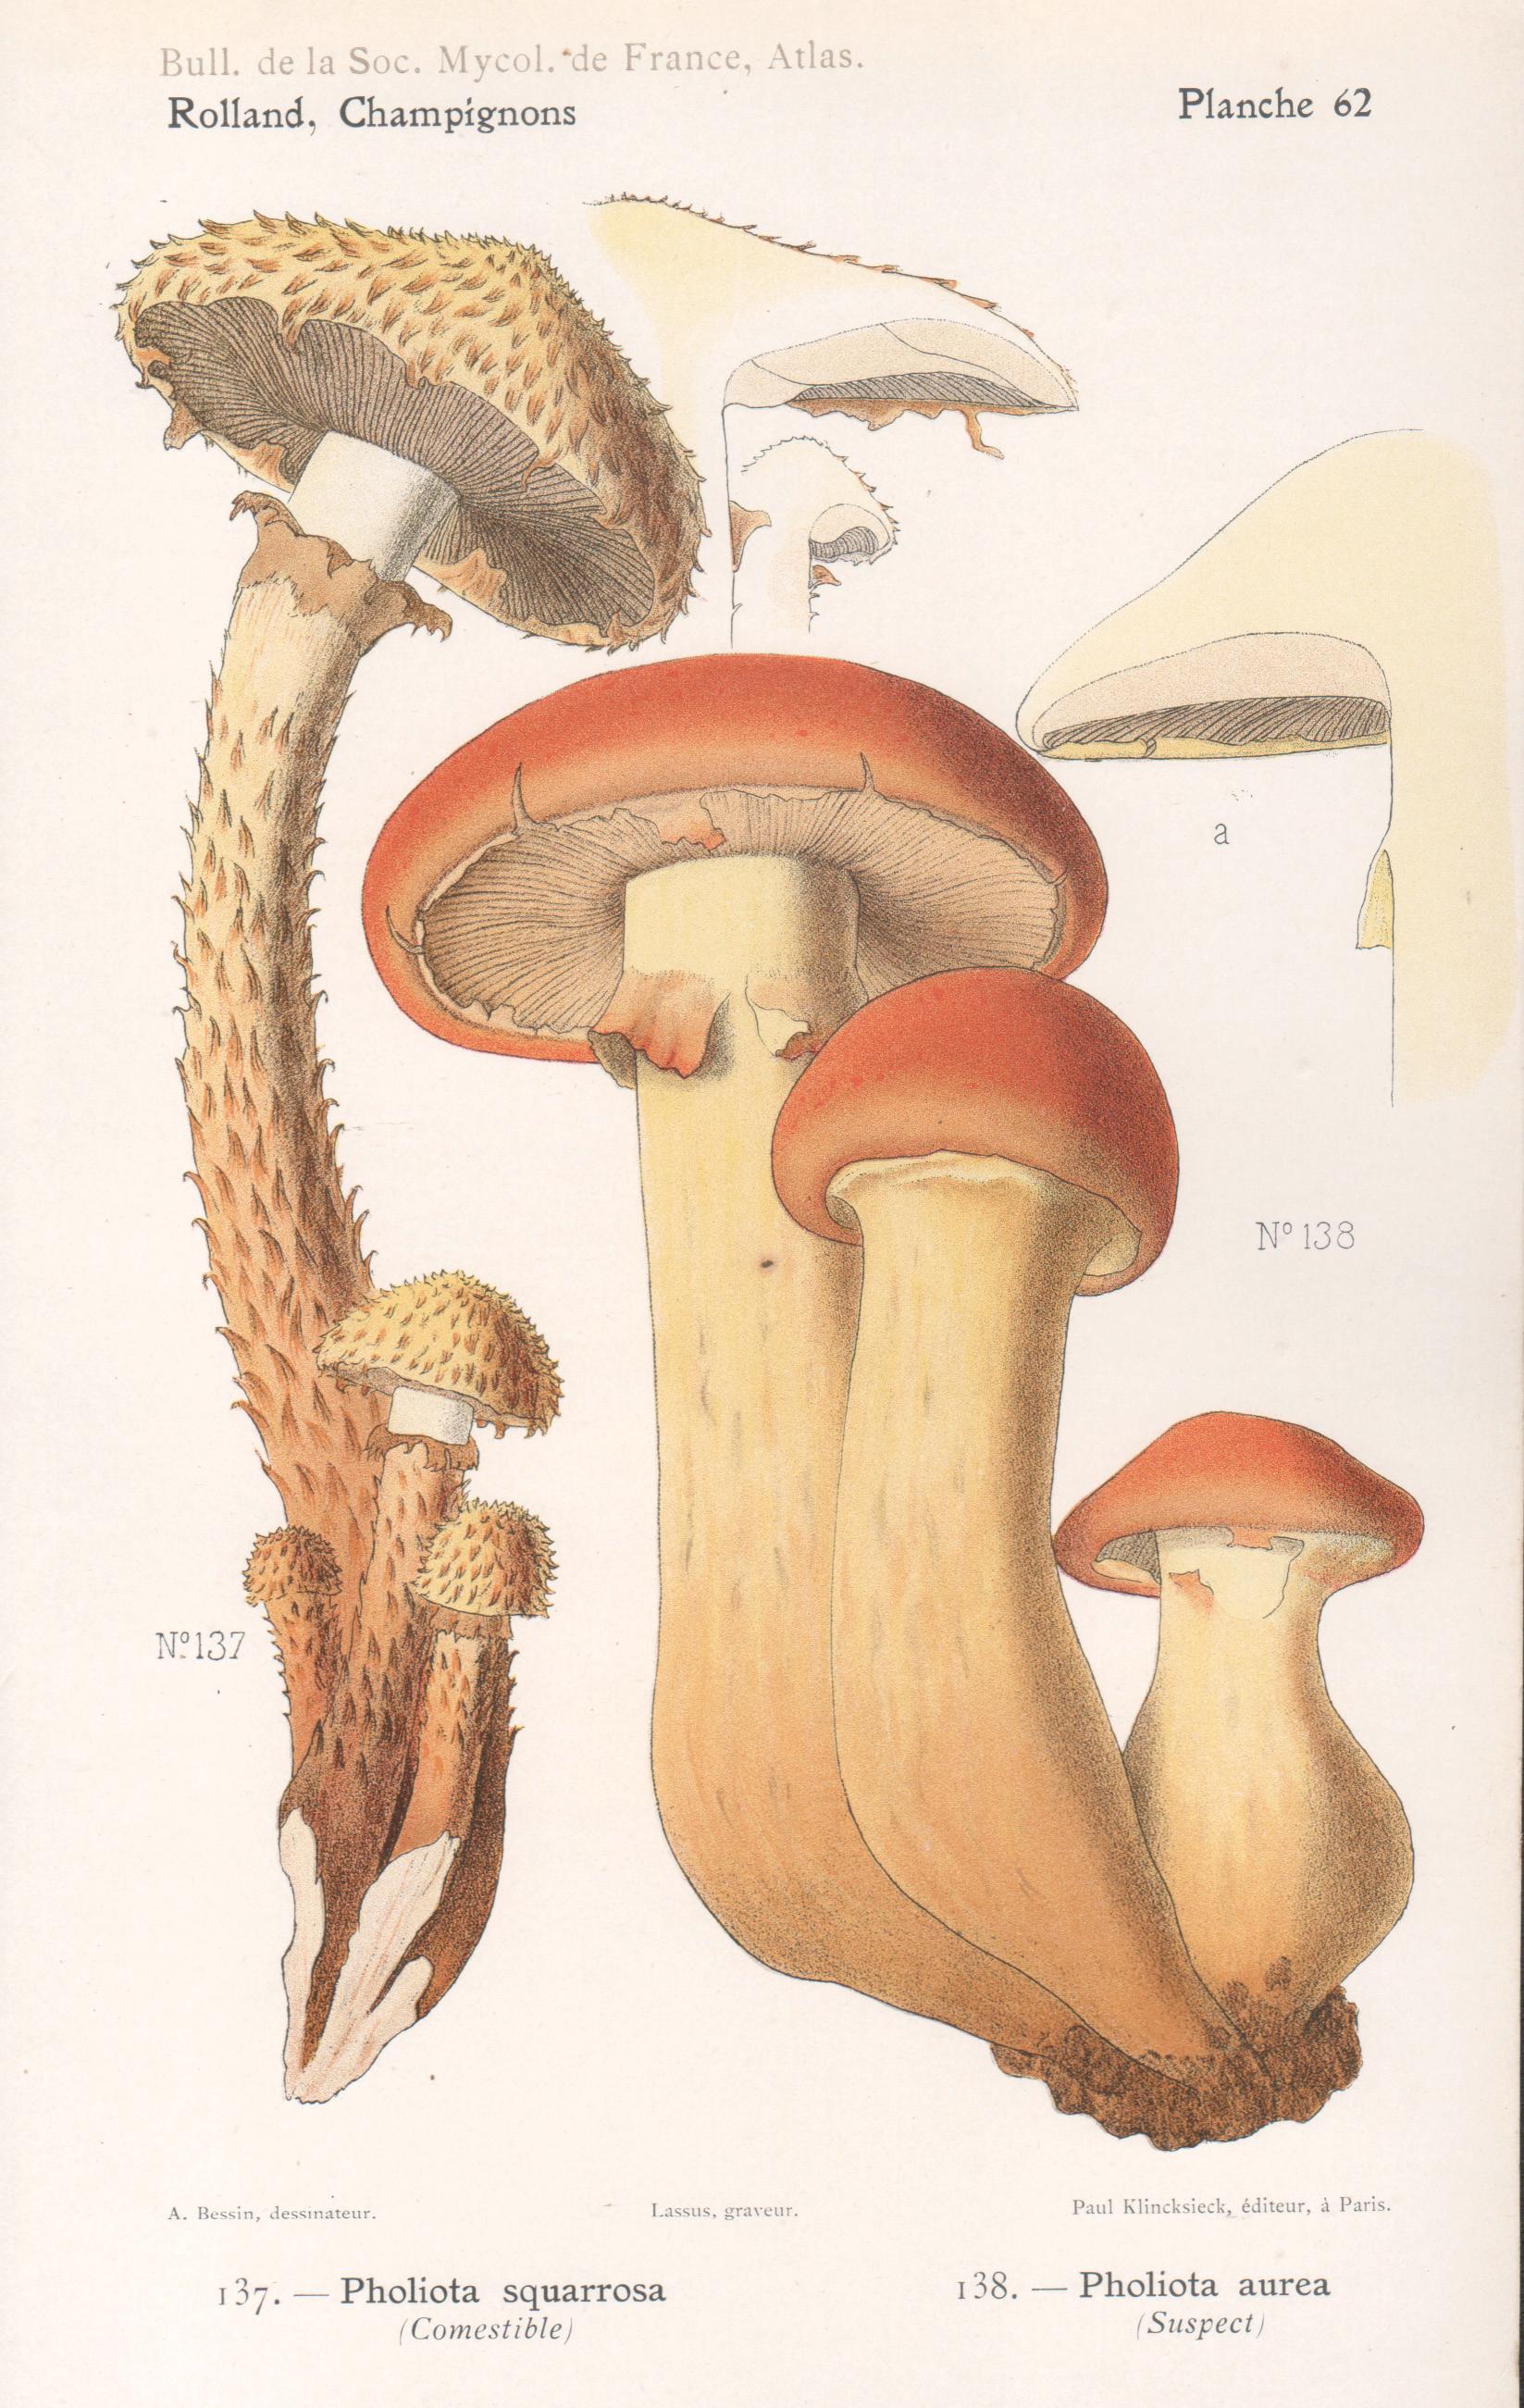 Lassus after Aimé Bessin Still-Life Print - Champignons, French antique mushroom fungi chromolithograph, 1910